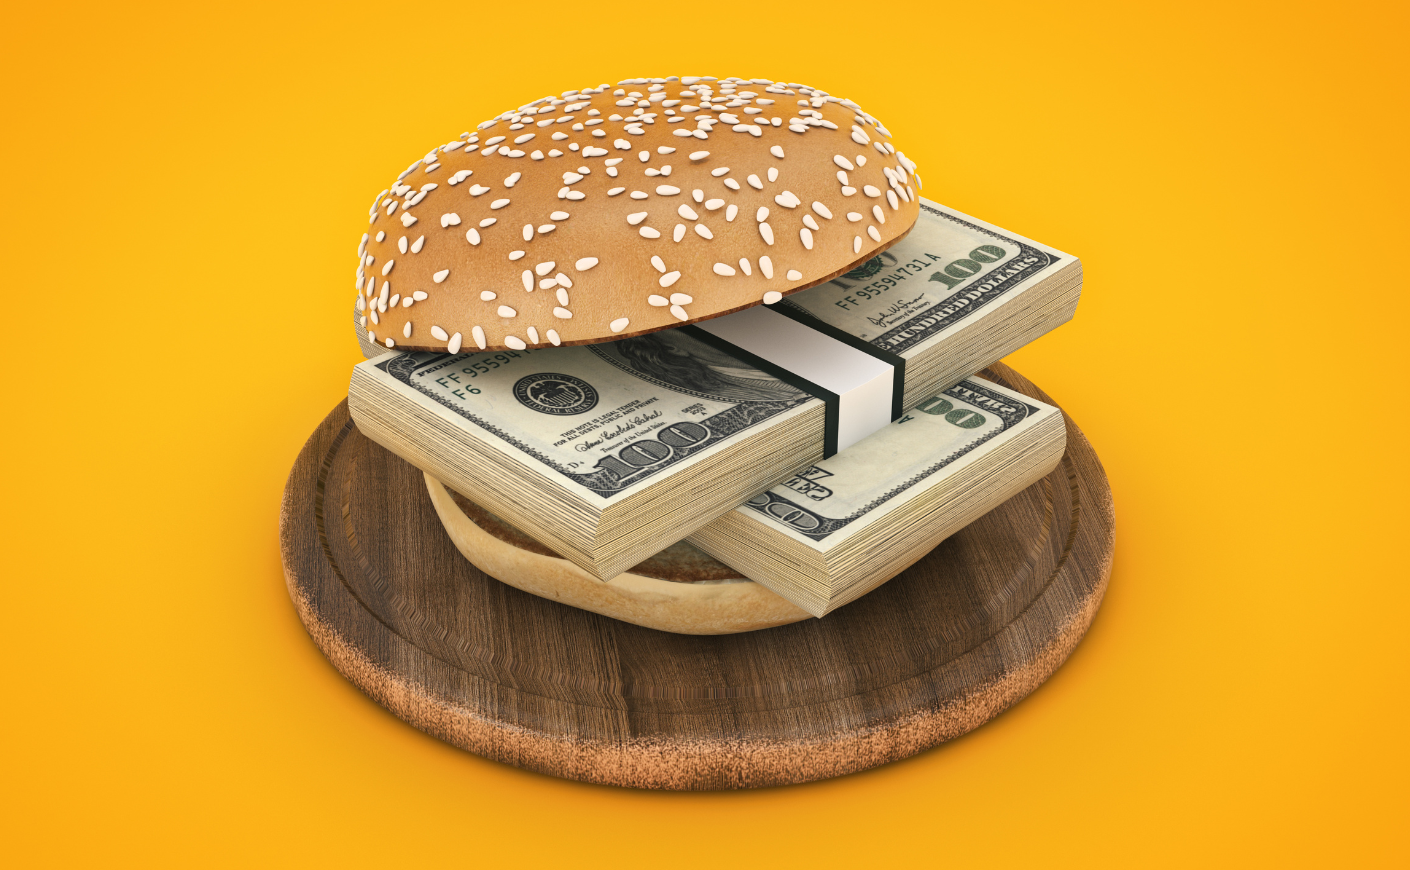 Stacks of $100 bills in between a hamburger bun